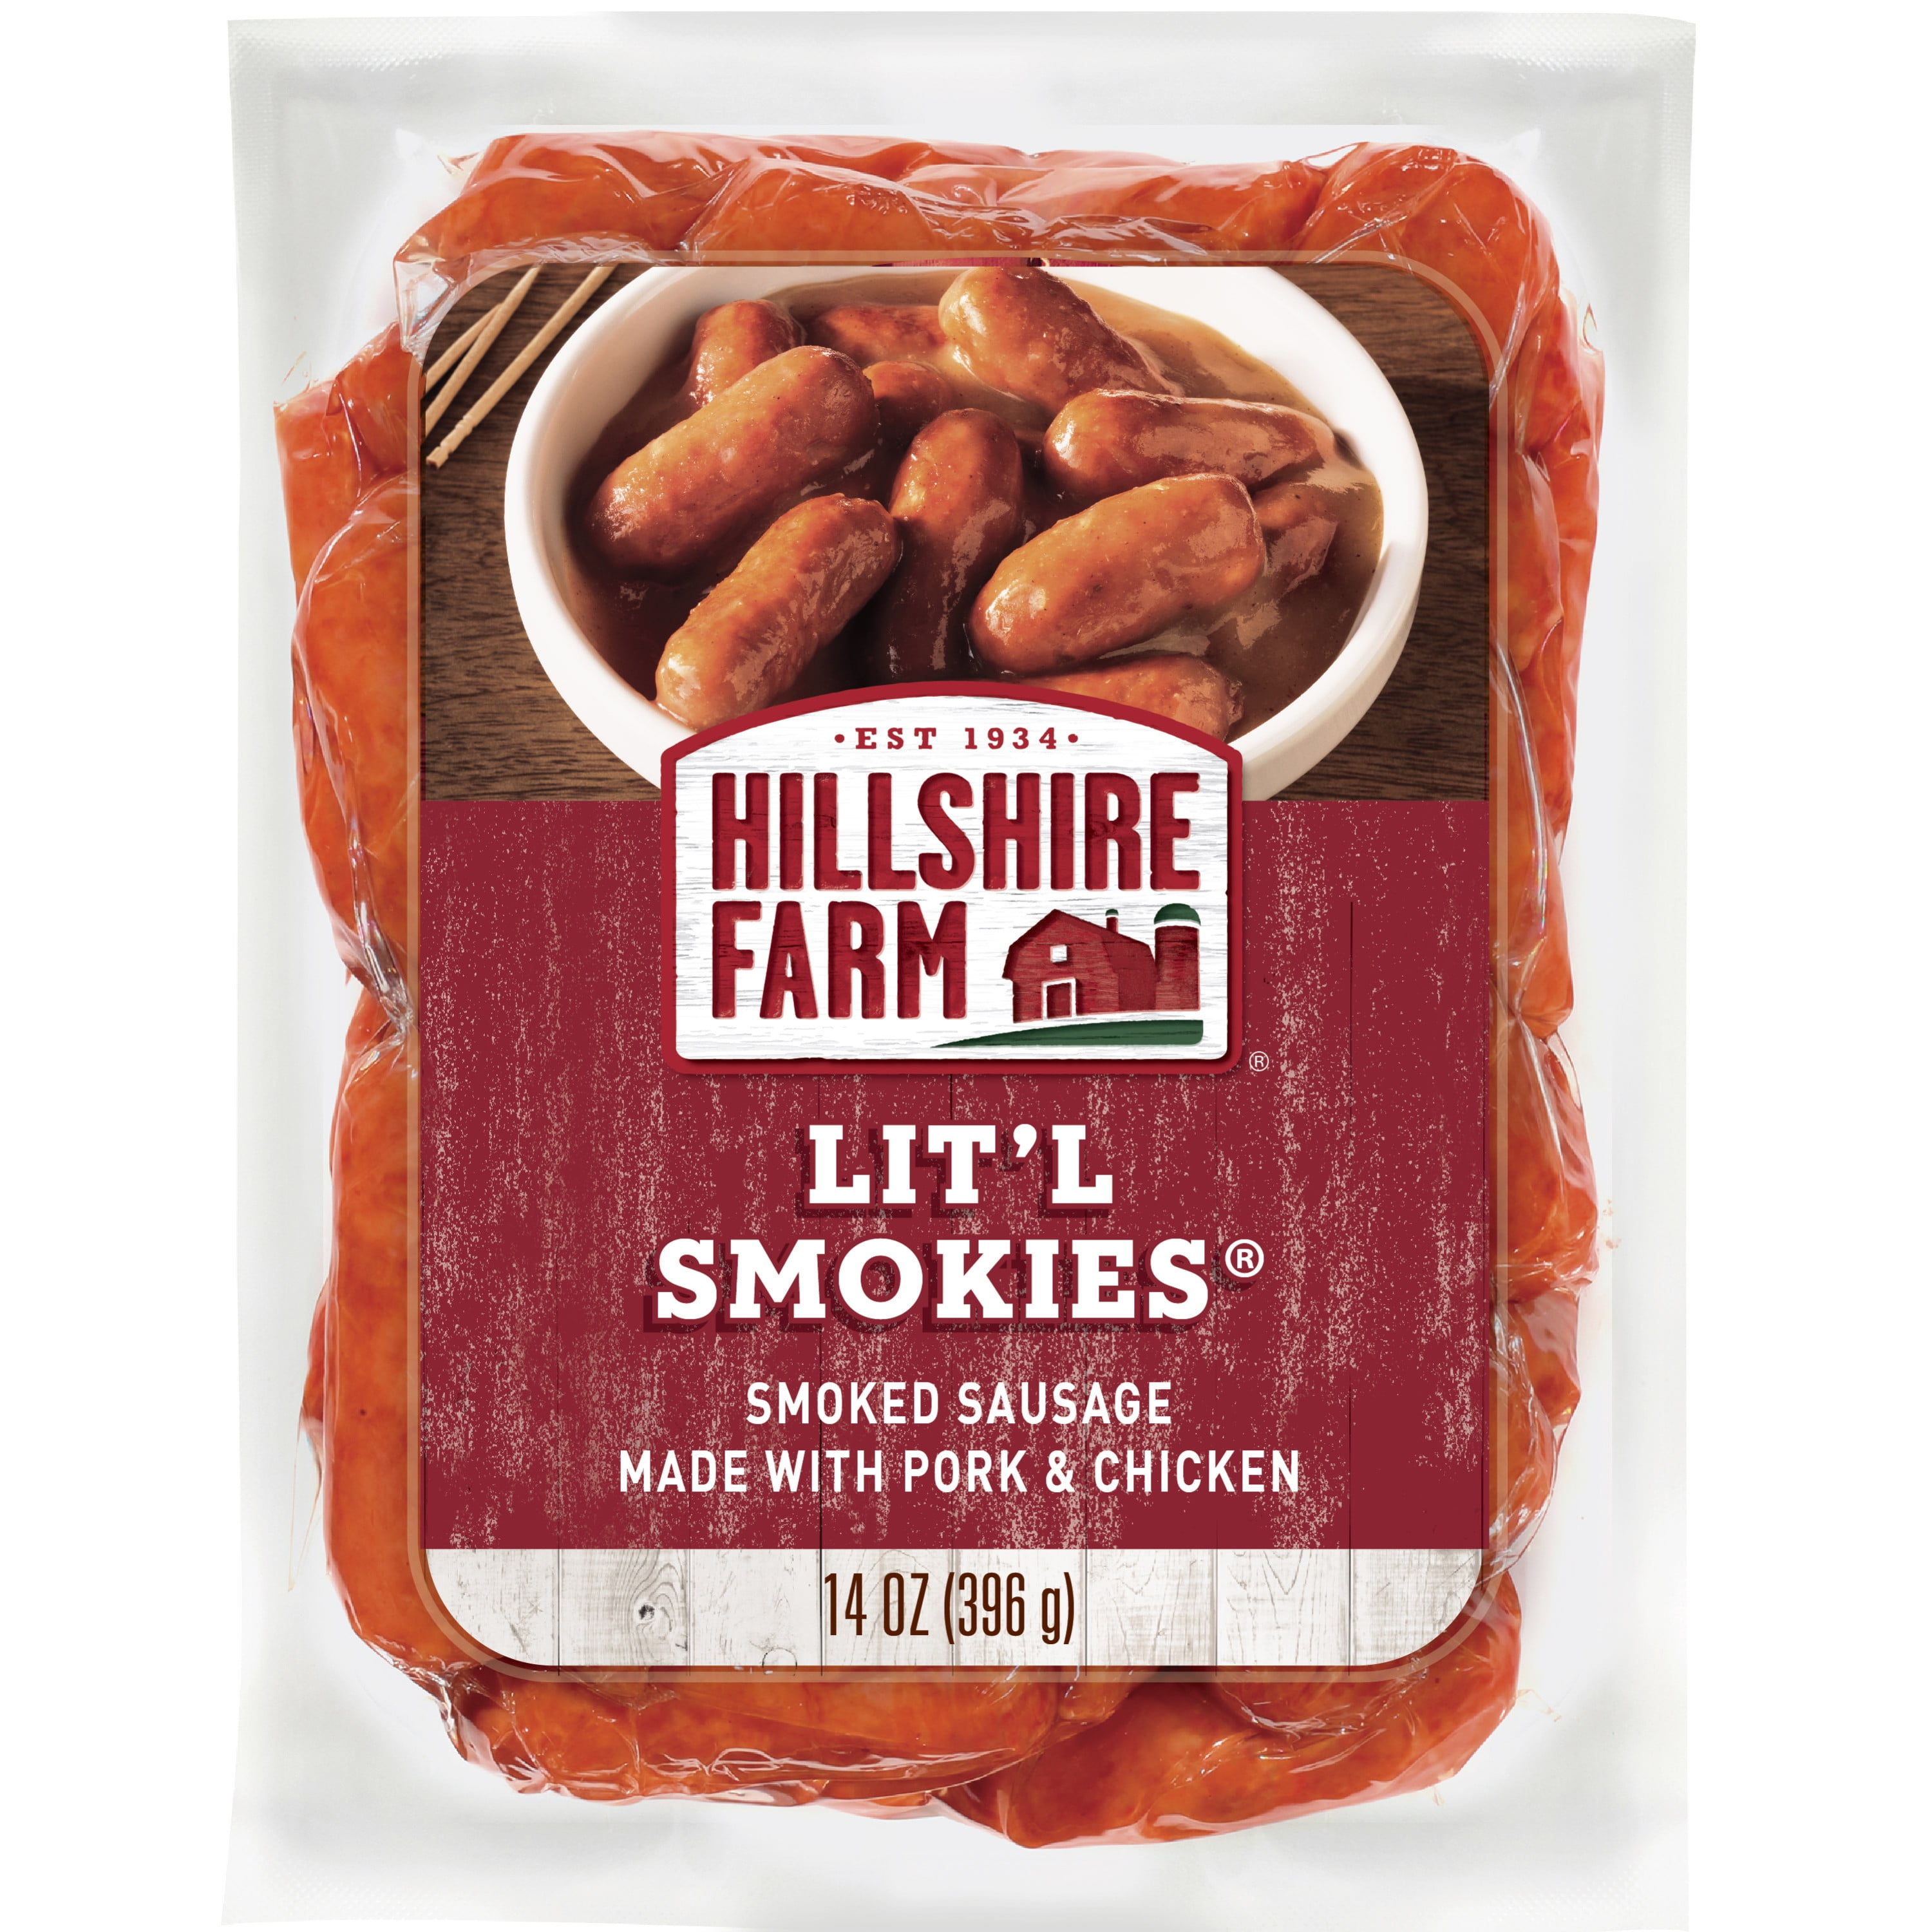 Hillshire Farm Lit'l Smokies Smoked Sausage, 14 oz